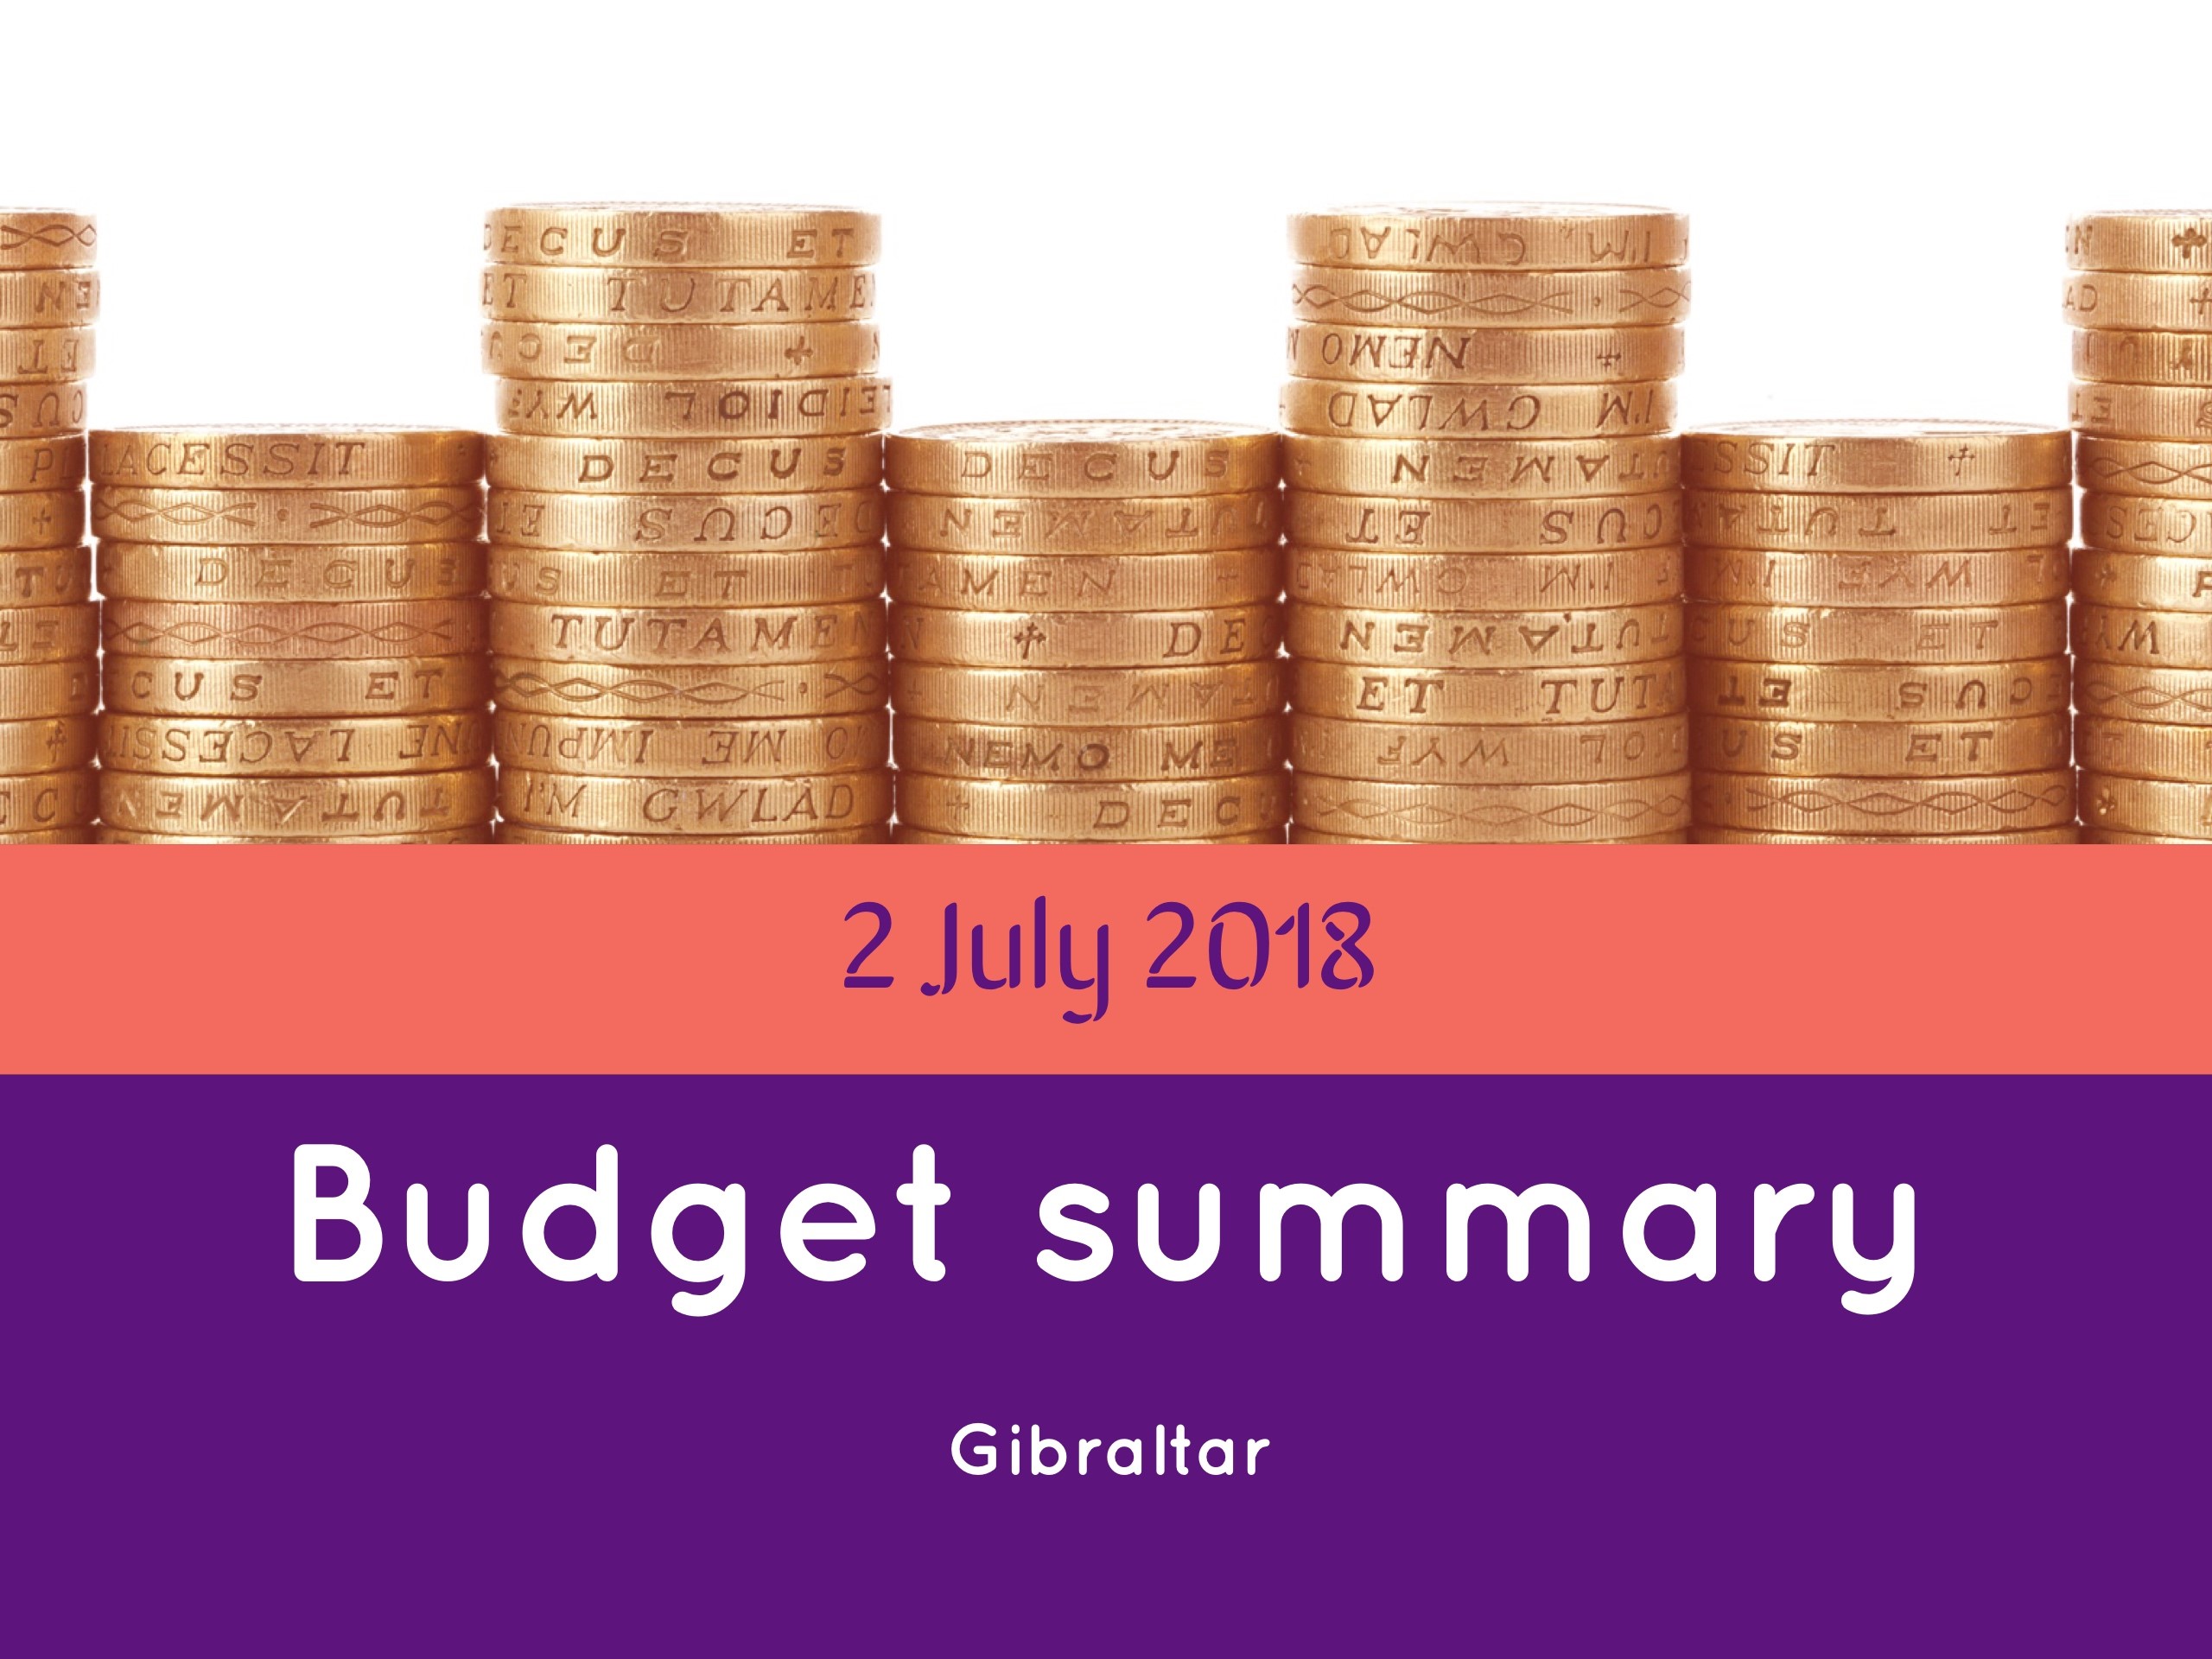 Gibraltar Budget Summary - July 2018 Image